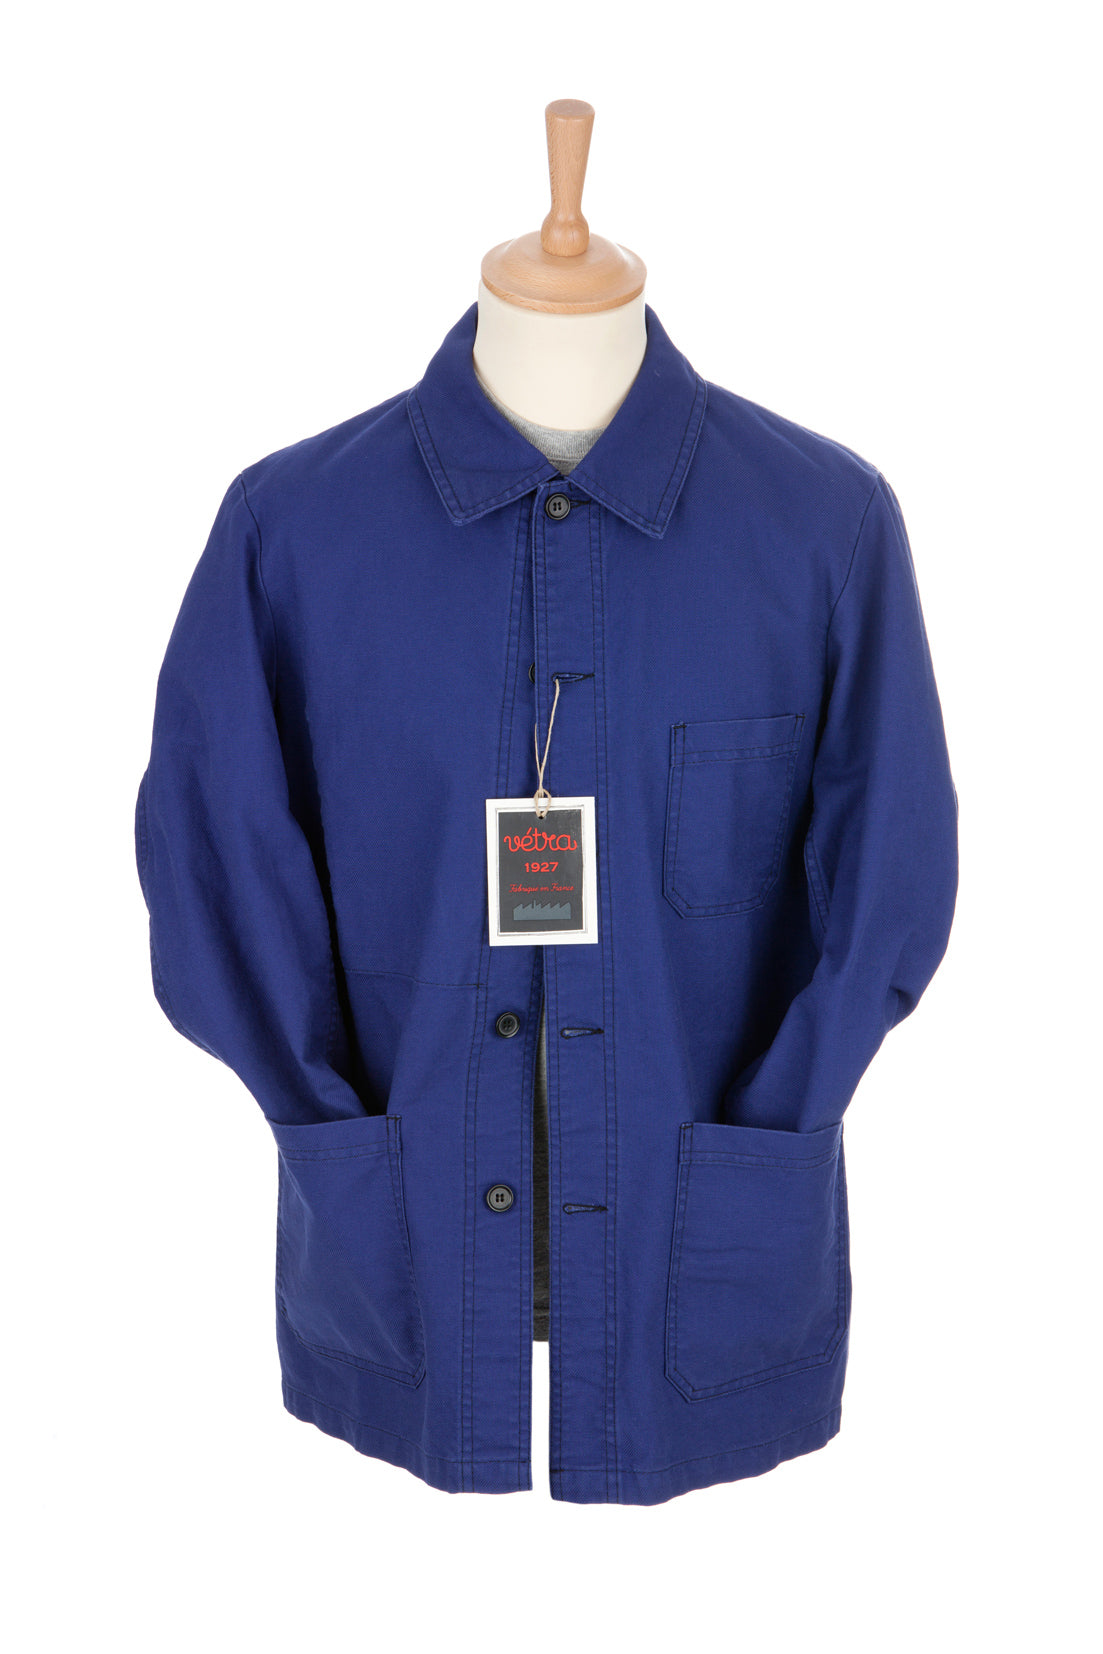 Vetra - French Work-Wear - Jacket 4 - Hydrone Blue - Regent Tailoring